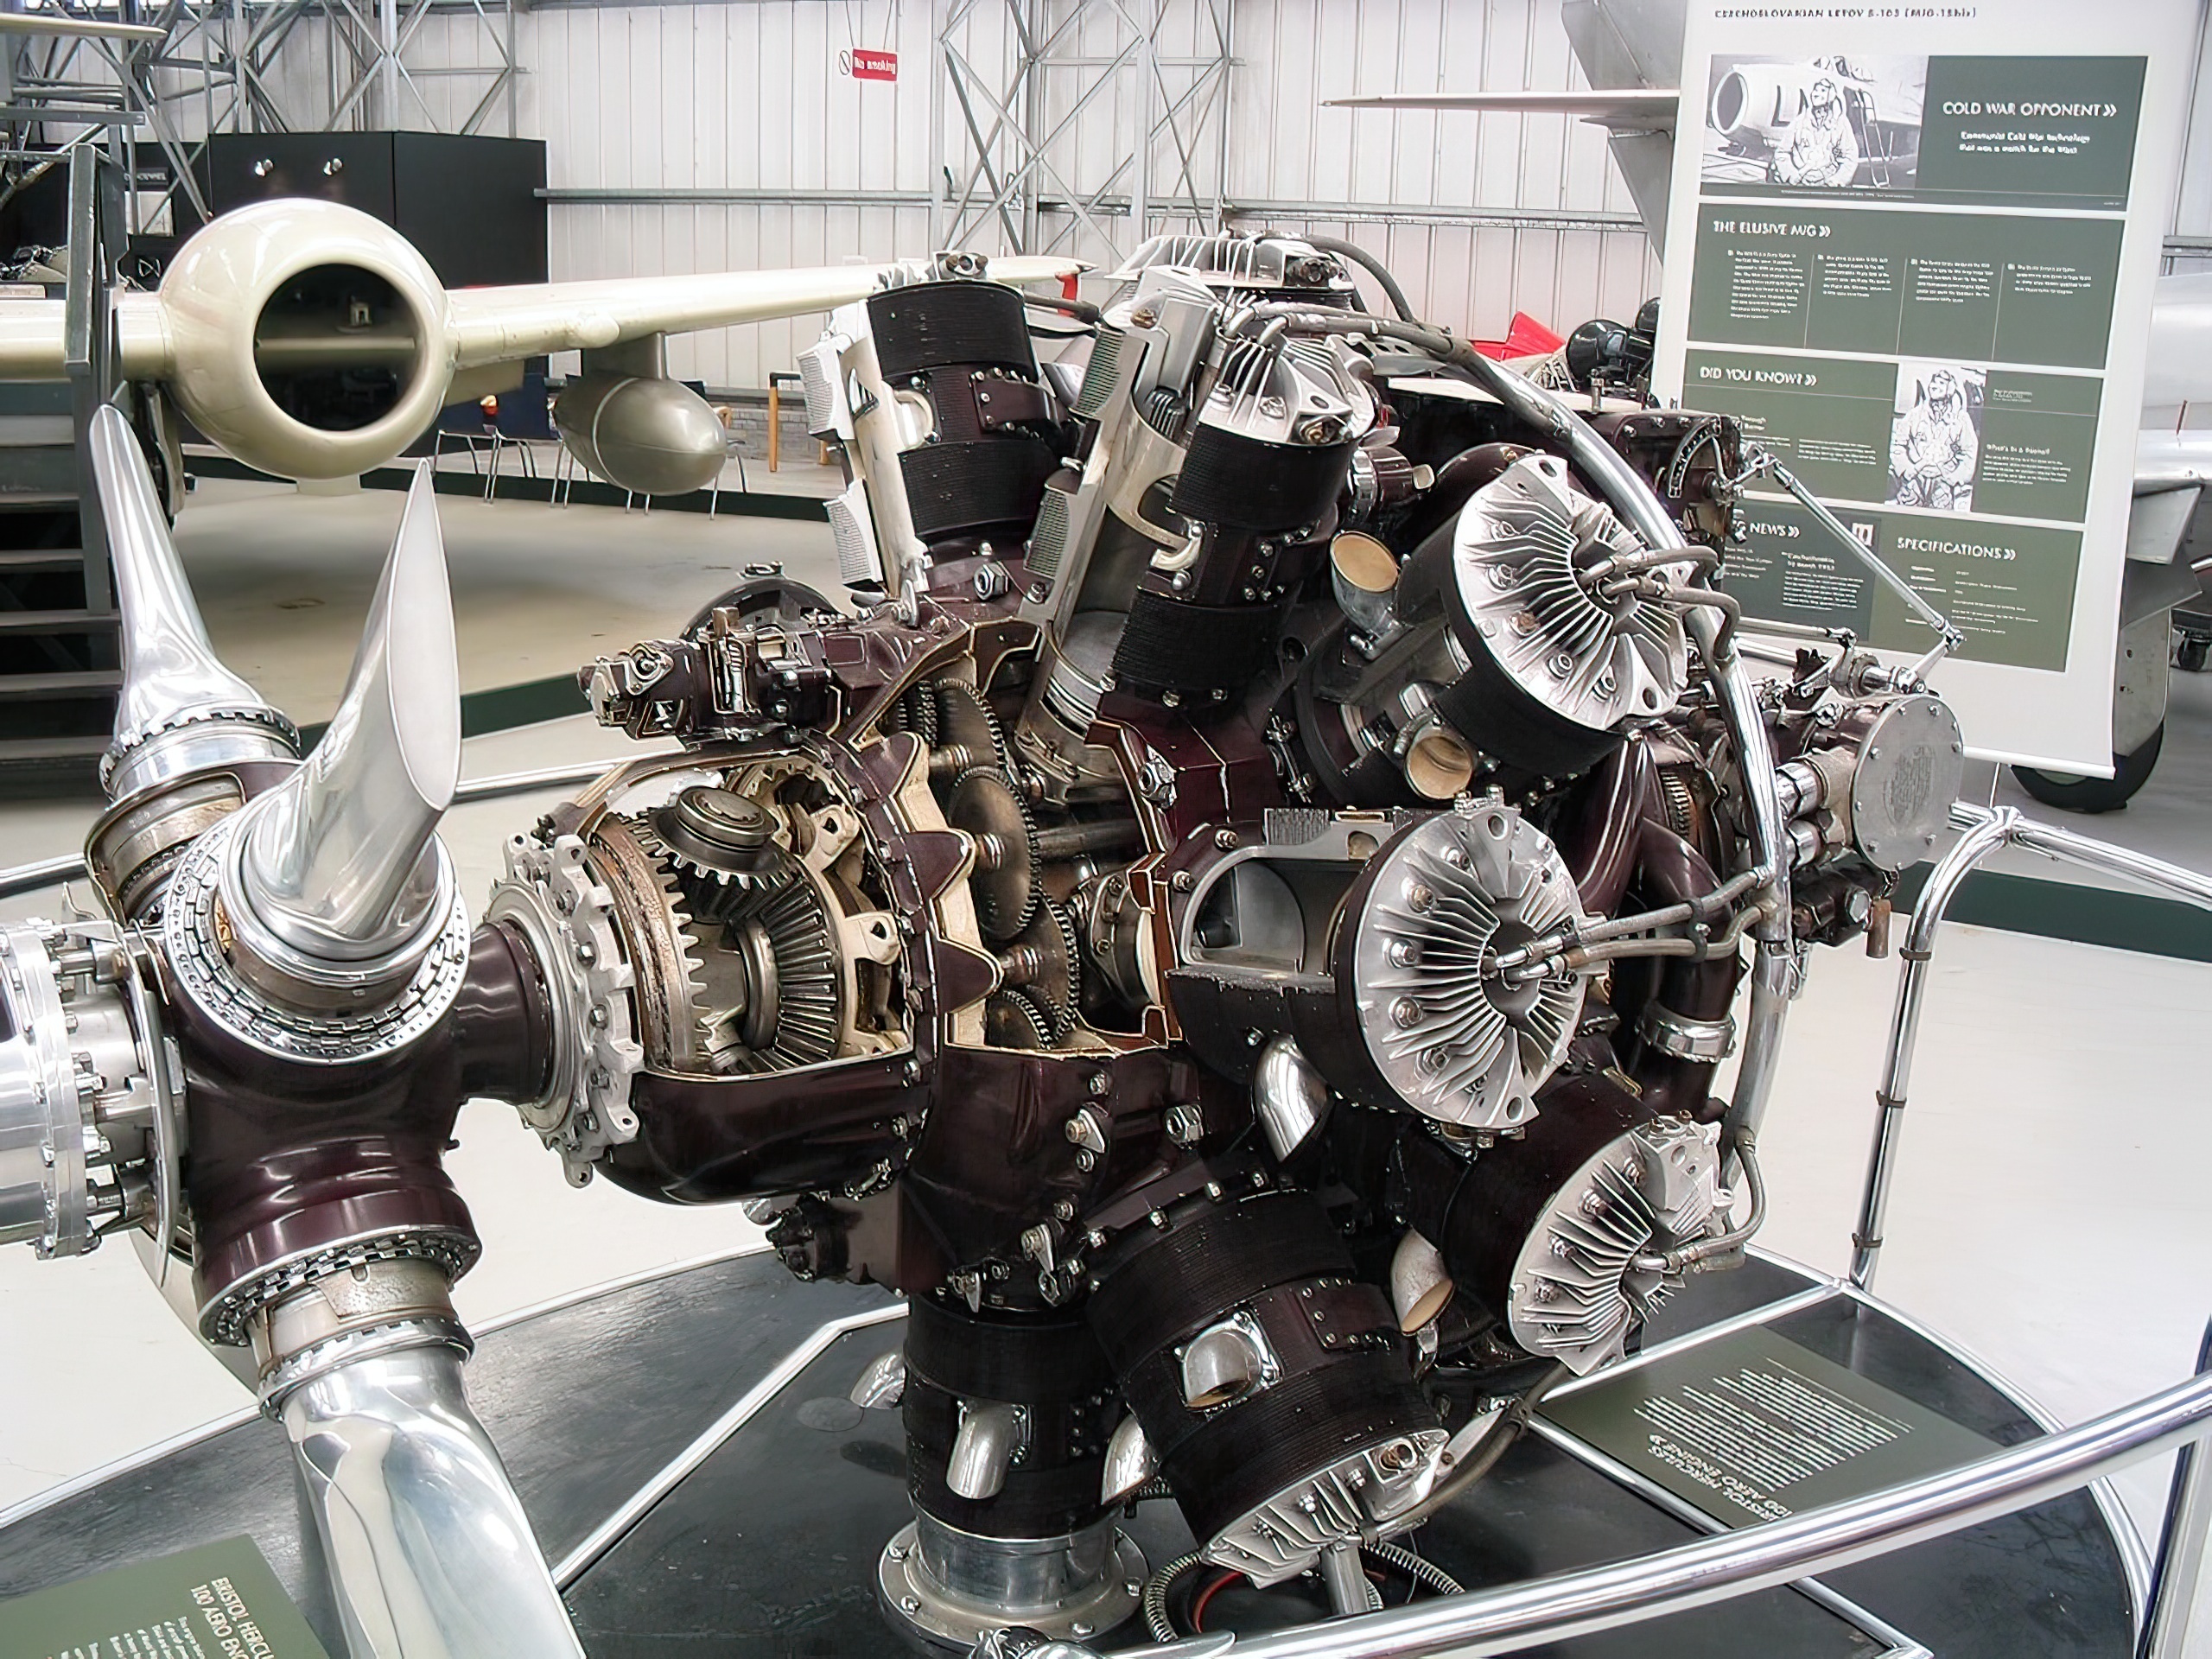 Bristol-hercules engine